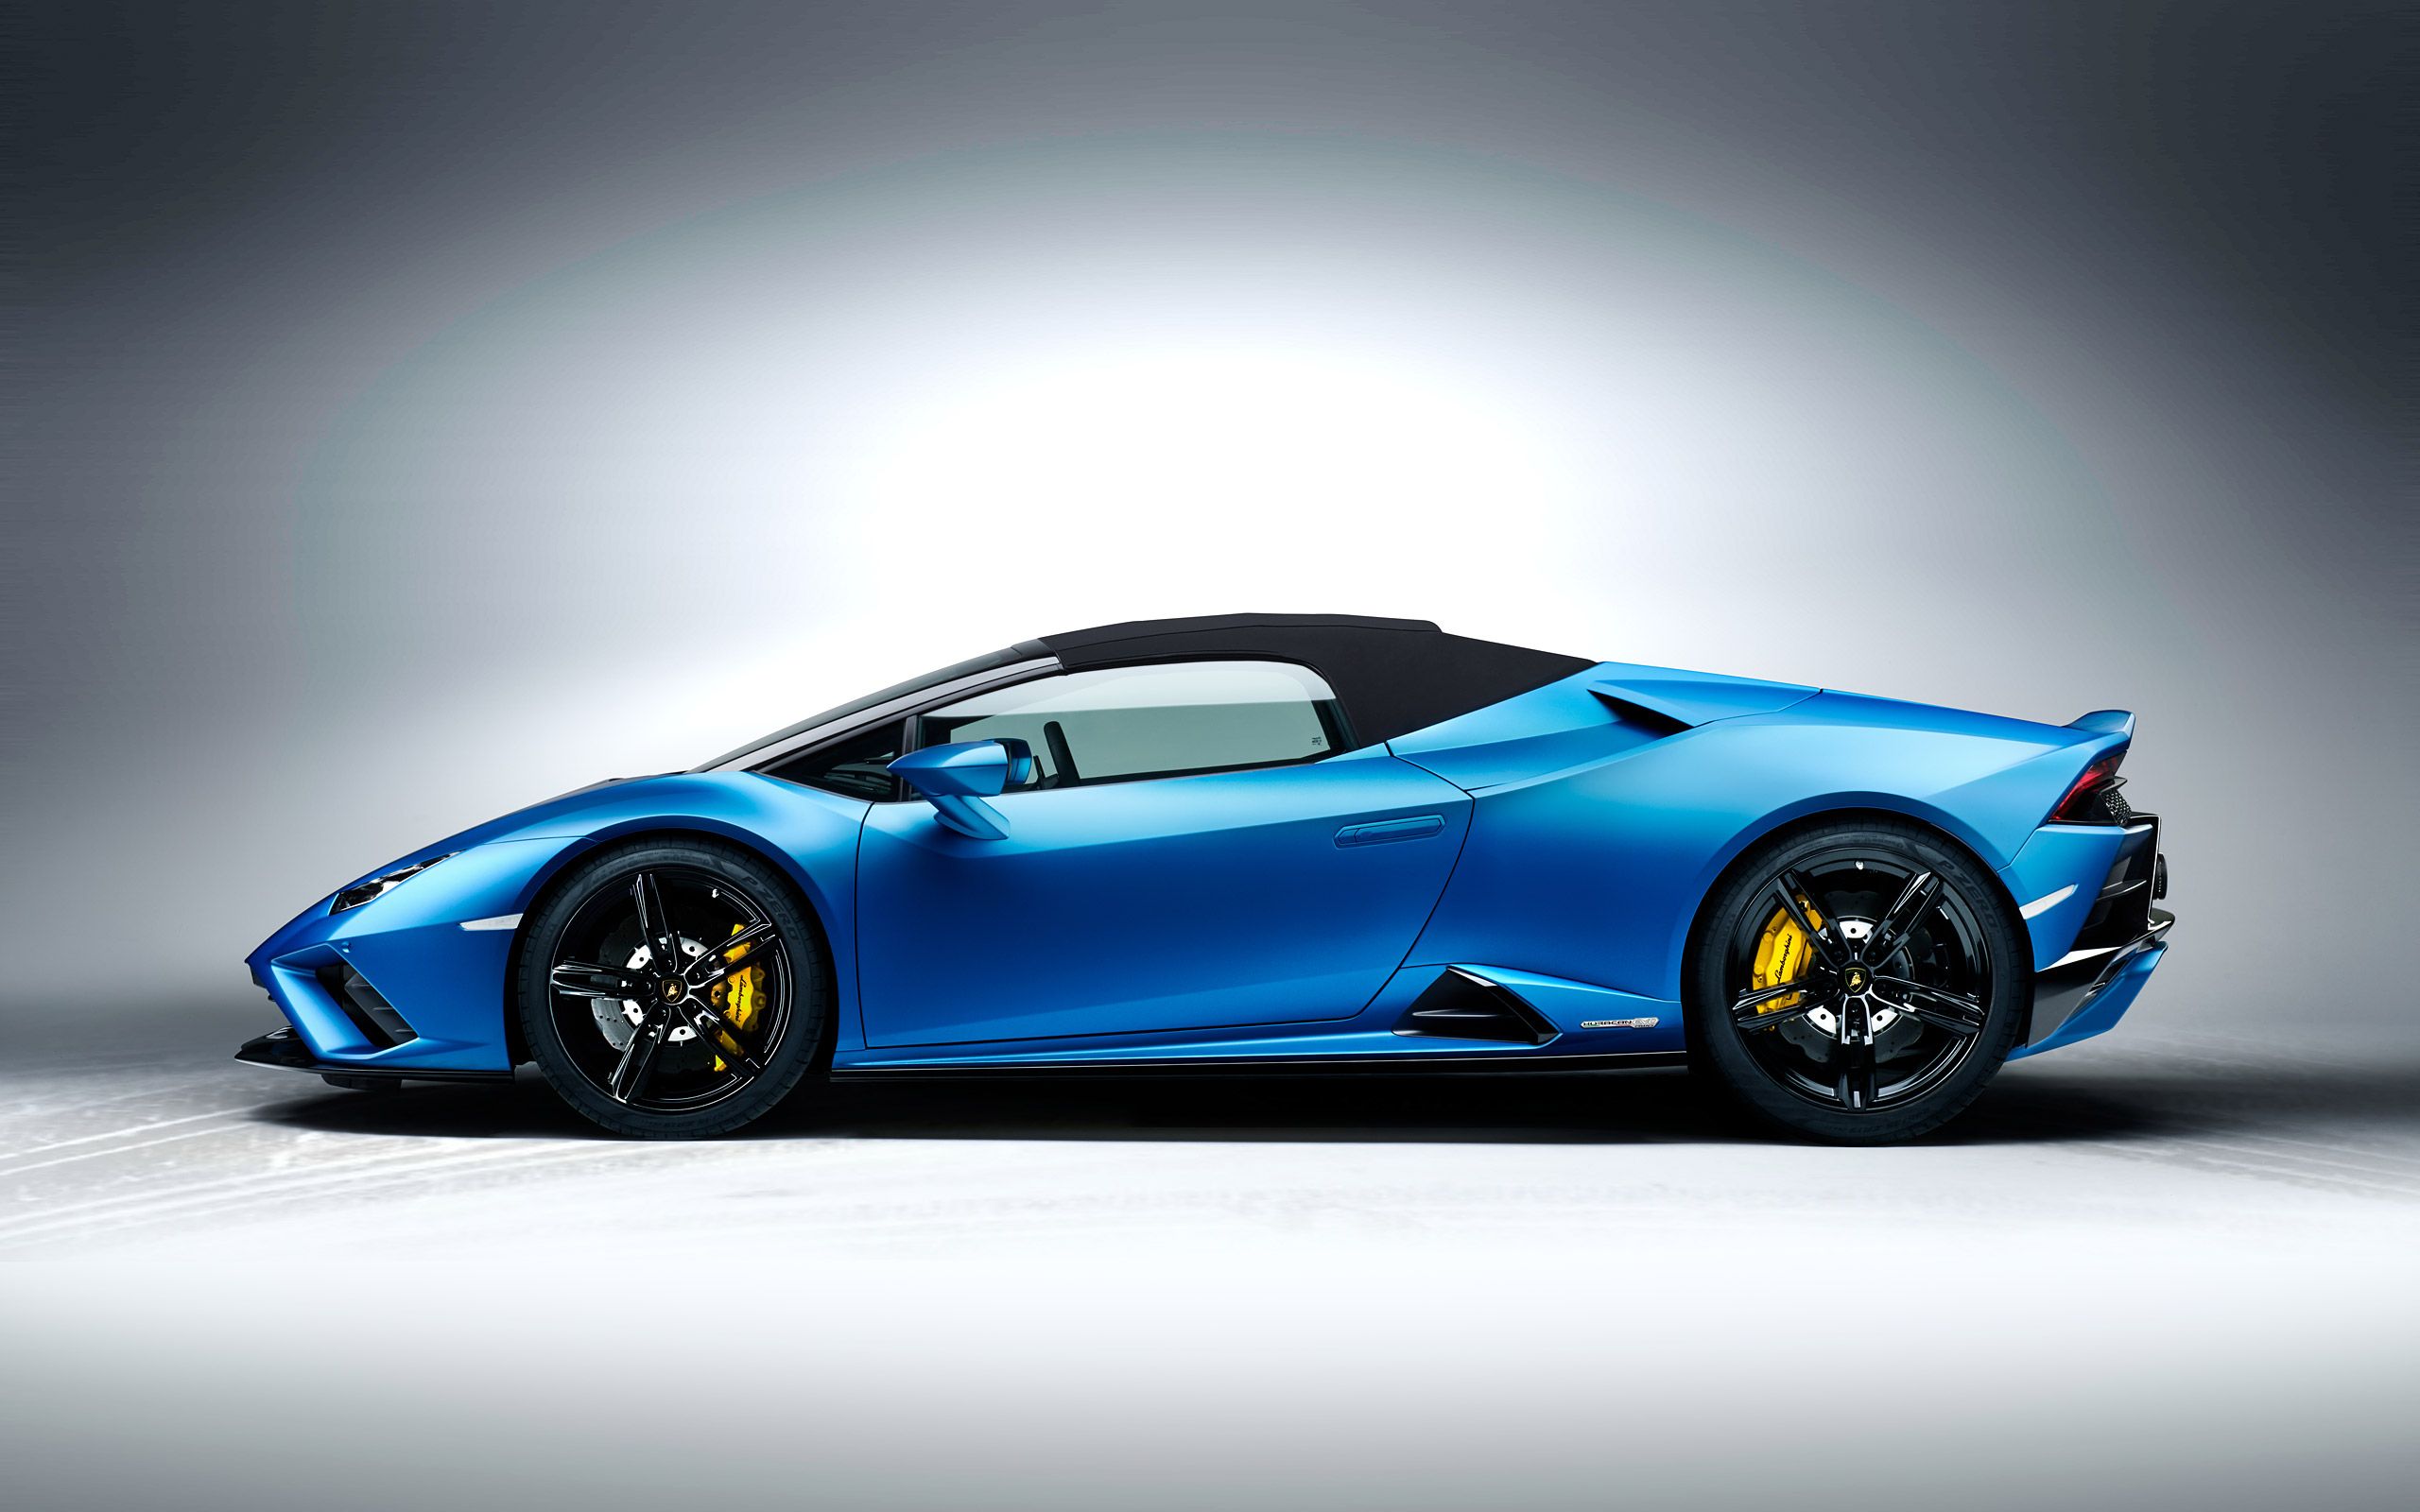 Lamborghini 2021 Model List: Current Lineup & Prices